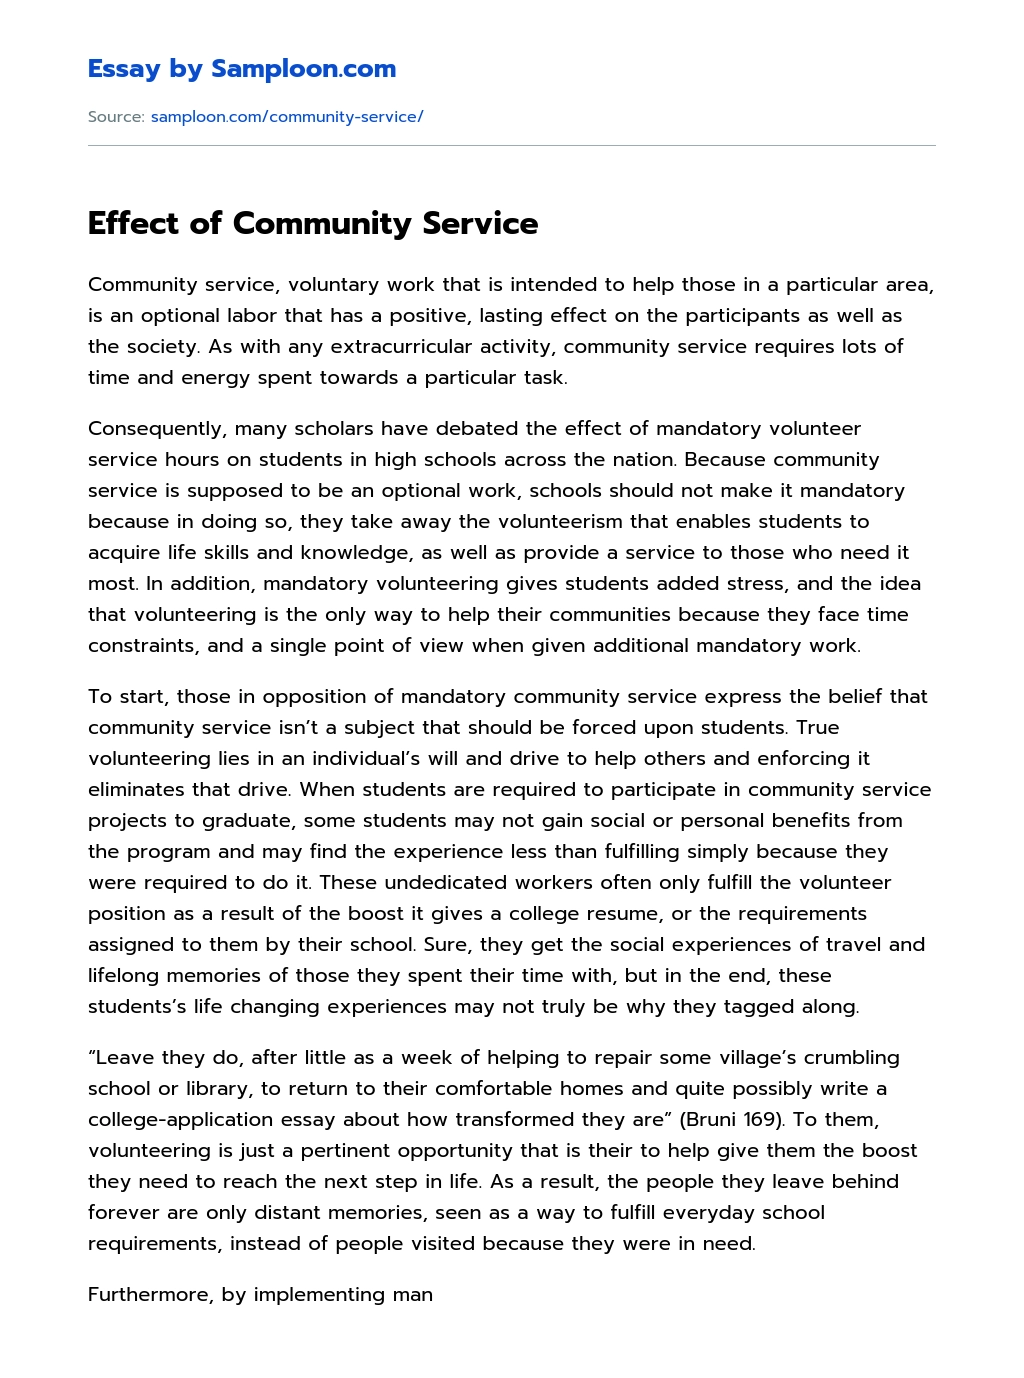 Effect of Community Service essay